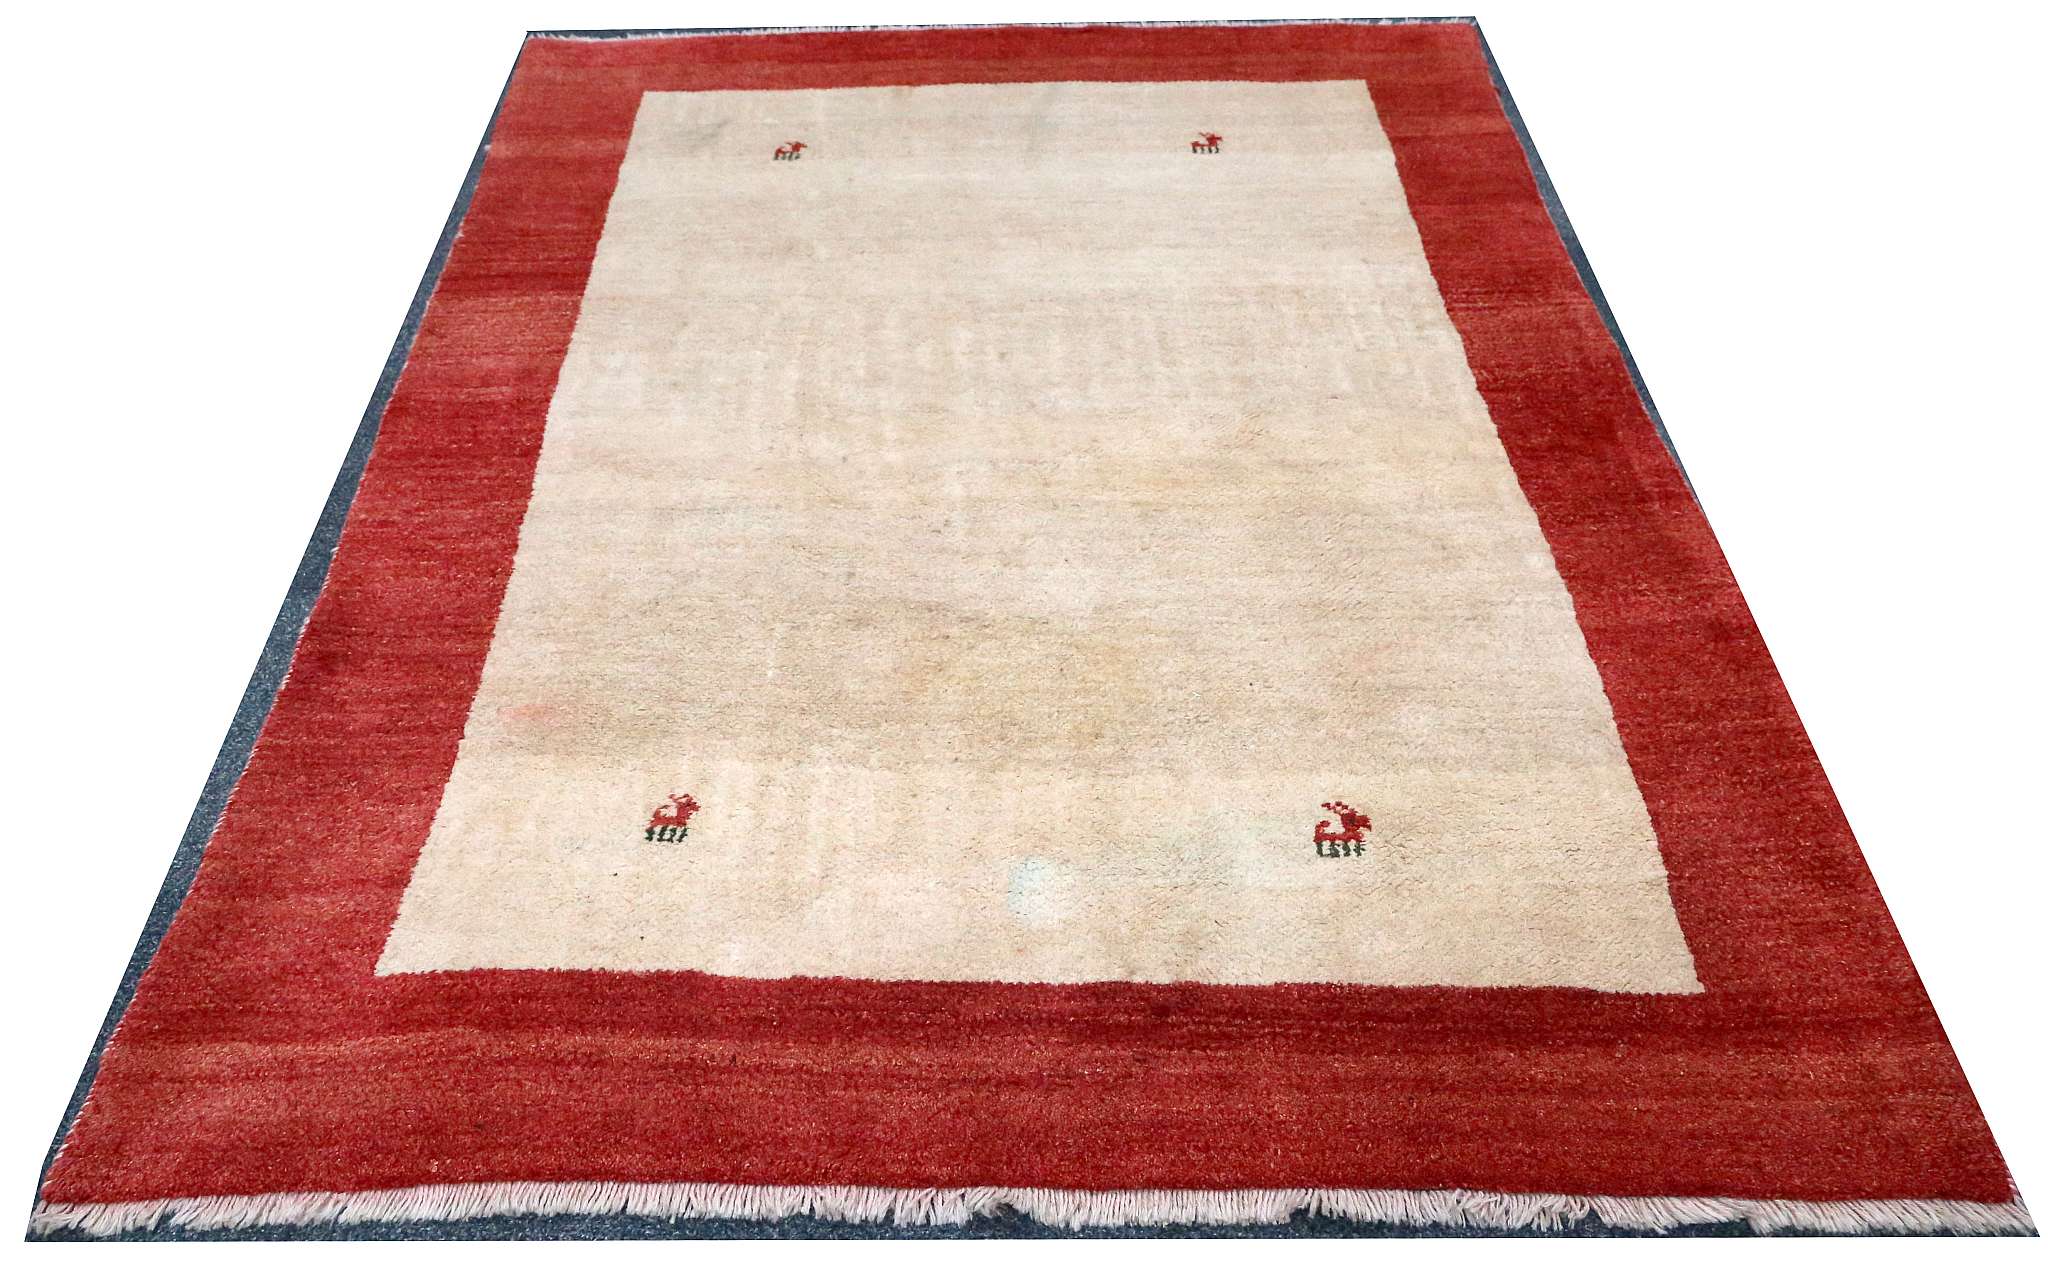 Persian Gabbeh carpet, 2.30m x 1.60m Condition Rating B/C